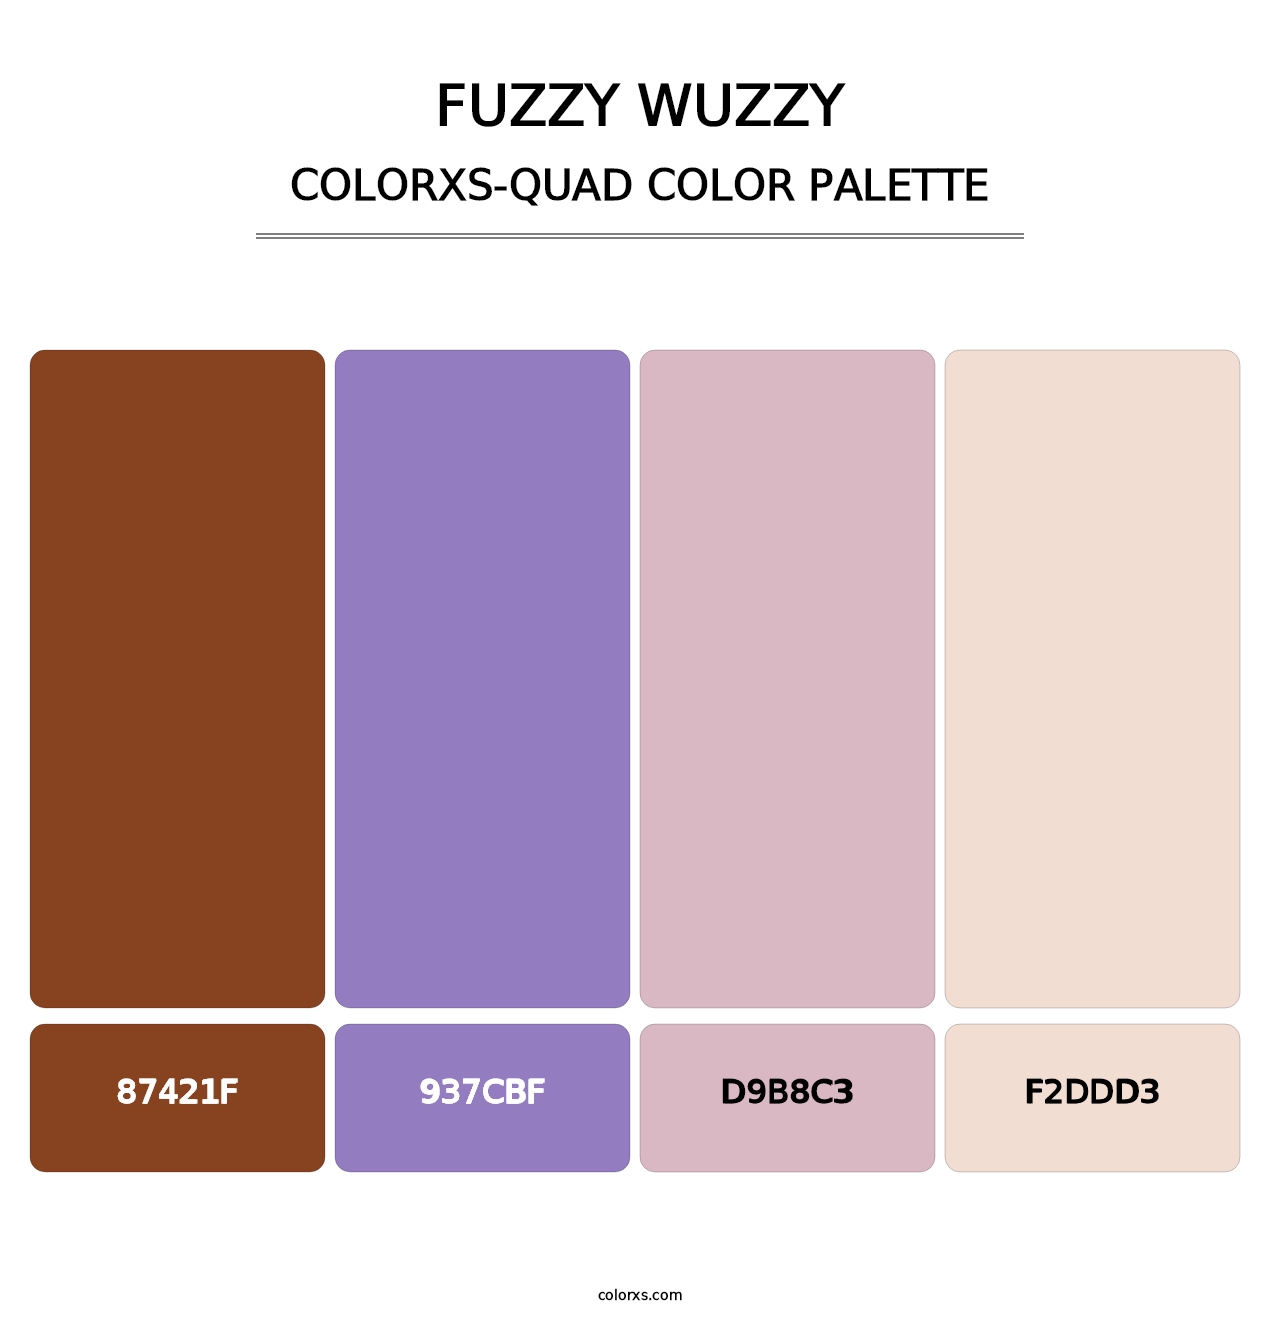 Fuzzy Wuzzy - Colorxs Quad Palette